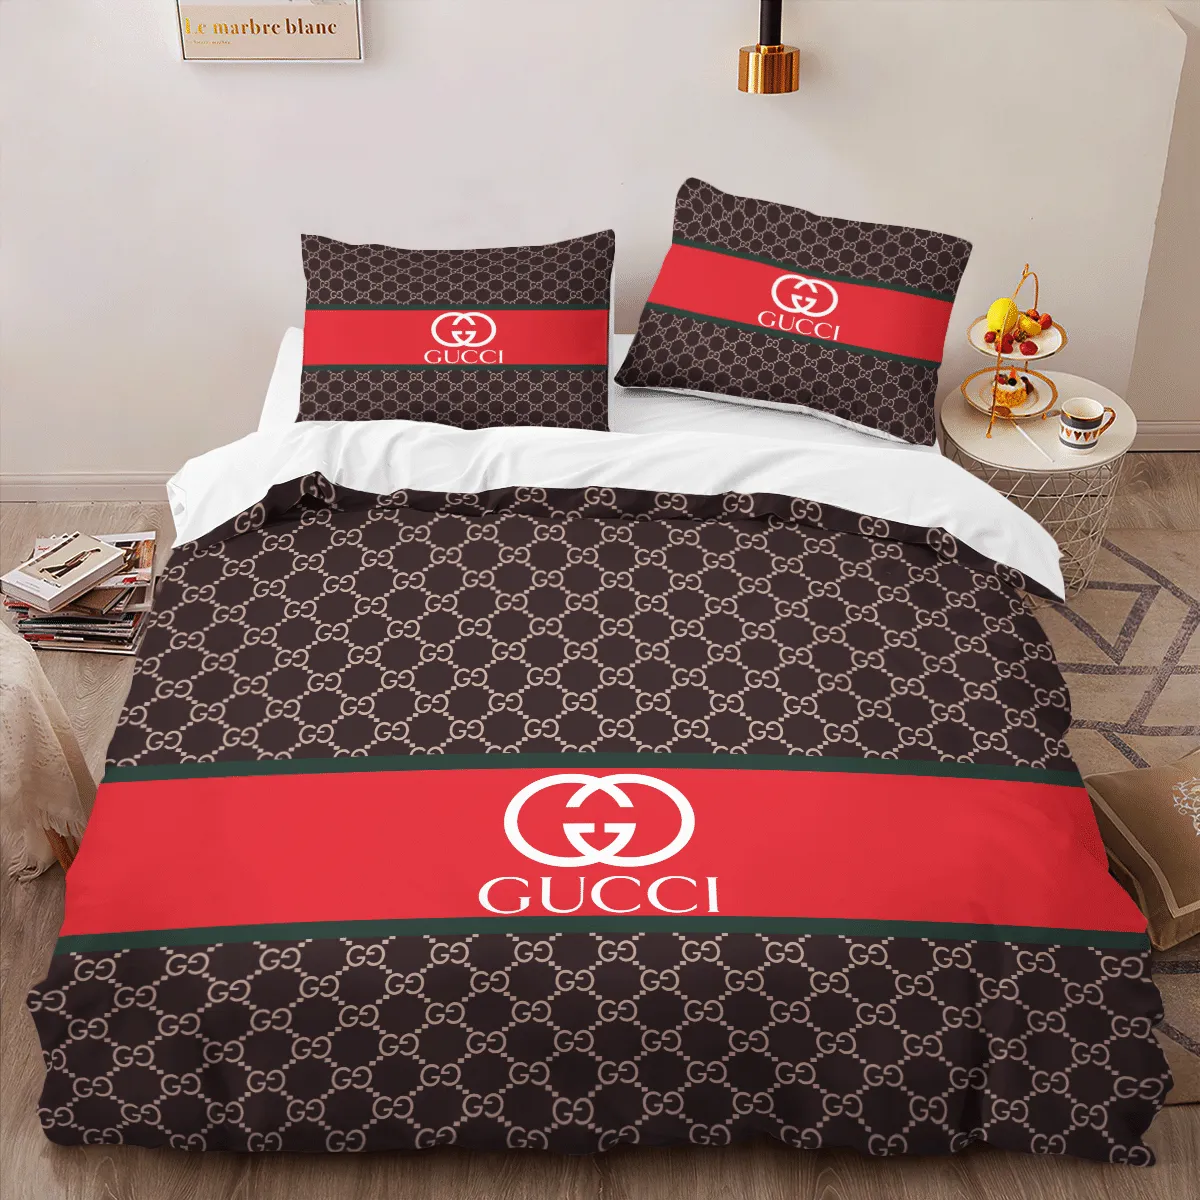 Gucci Logo Brand Bedding Set Home Decor Luxury Bedroom Bedspread